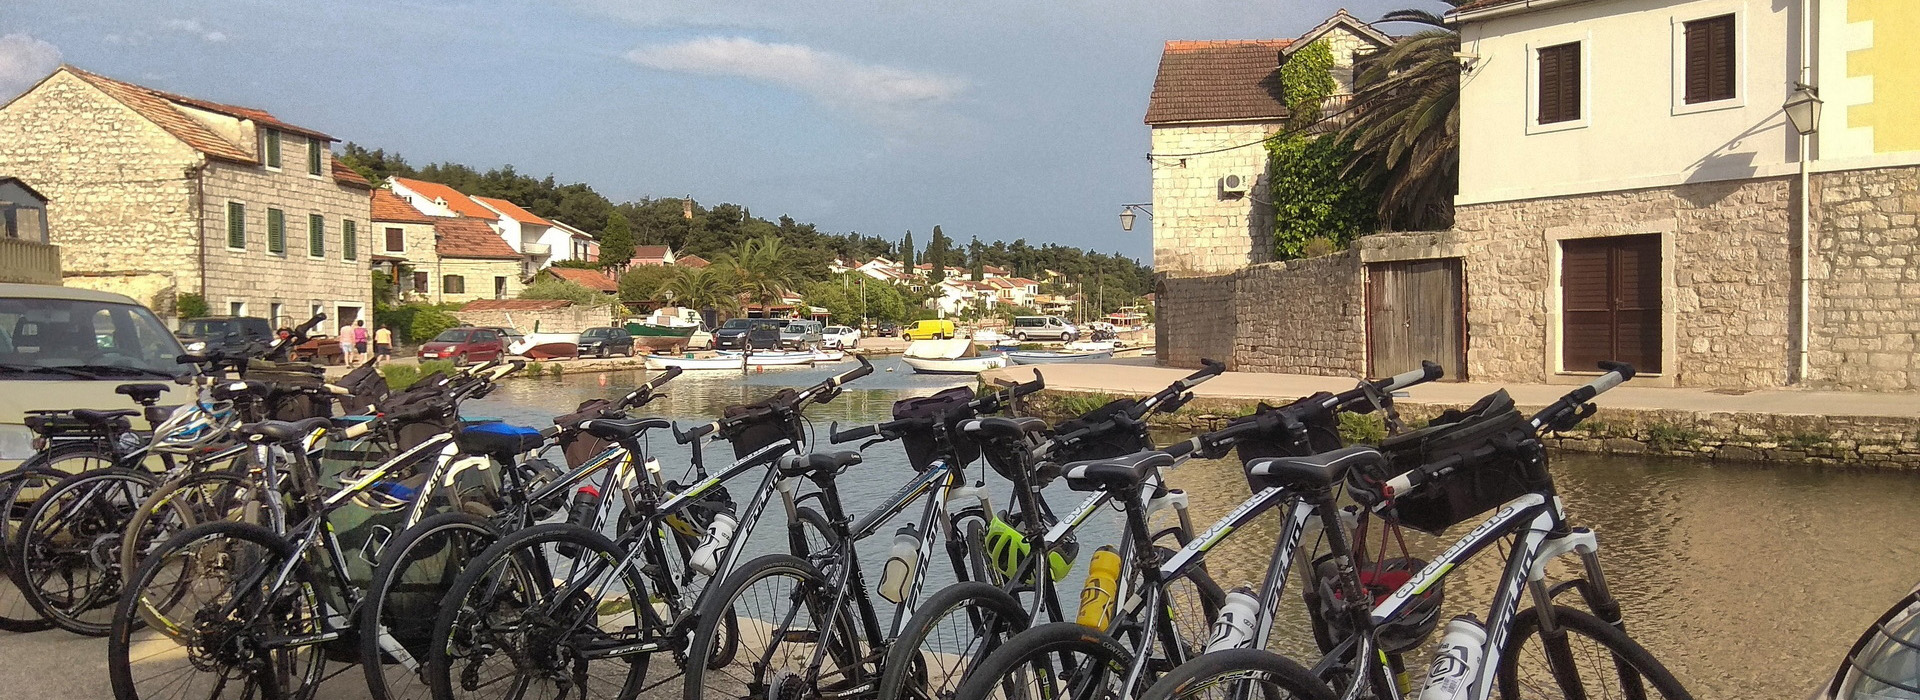 Cycling on the Dalmatian Coast guided holiday - Vrboska